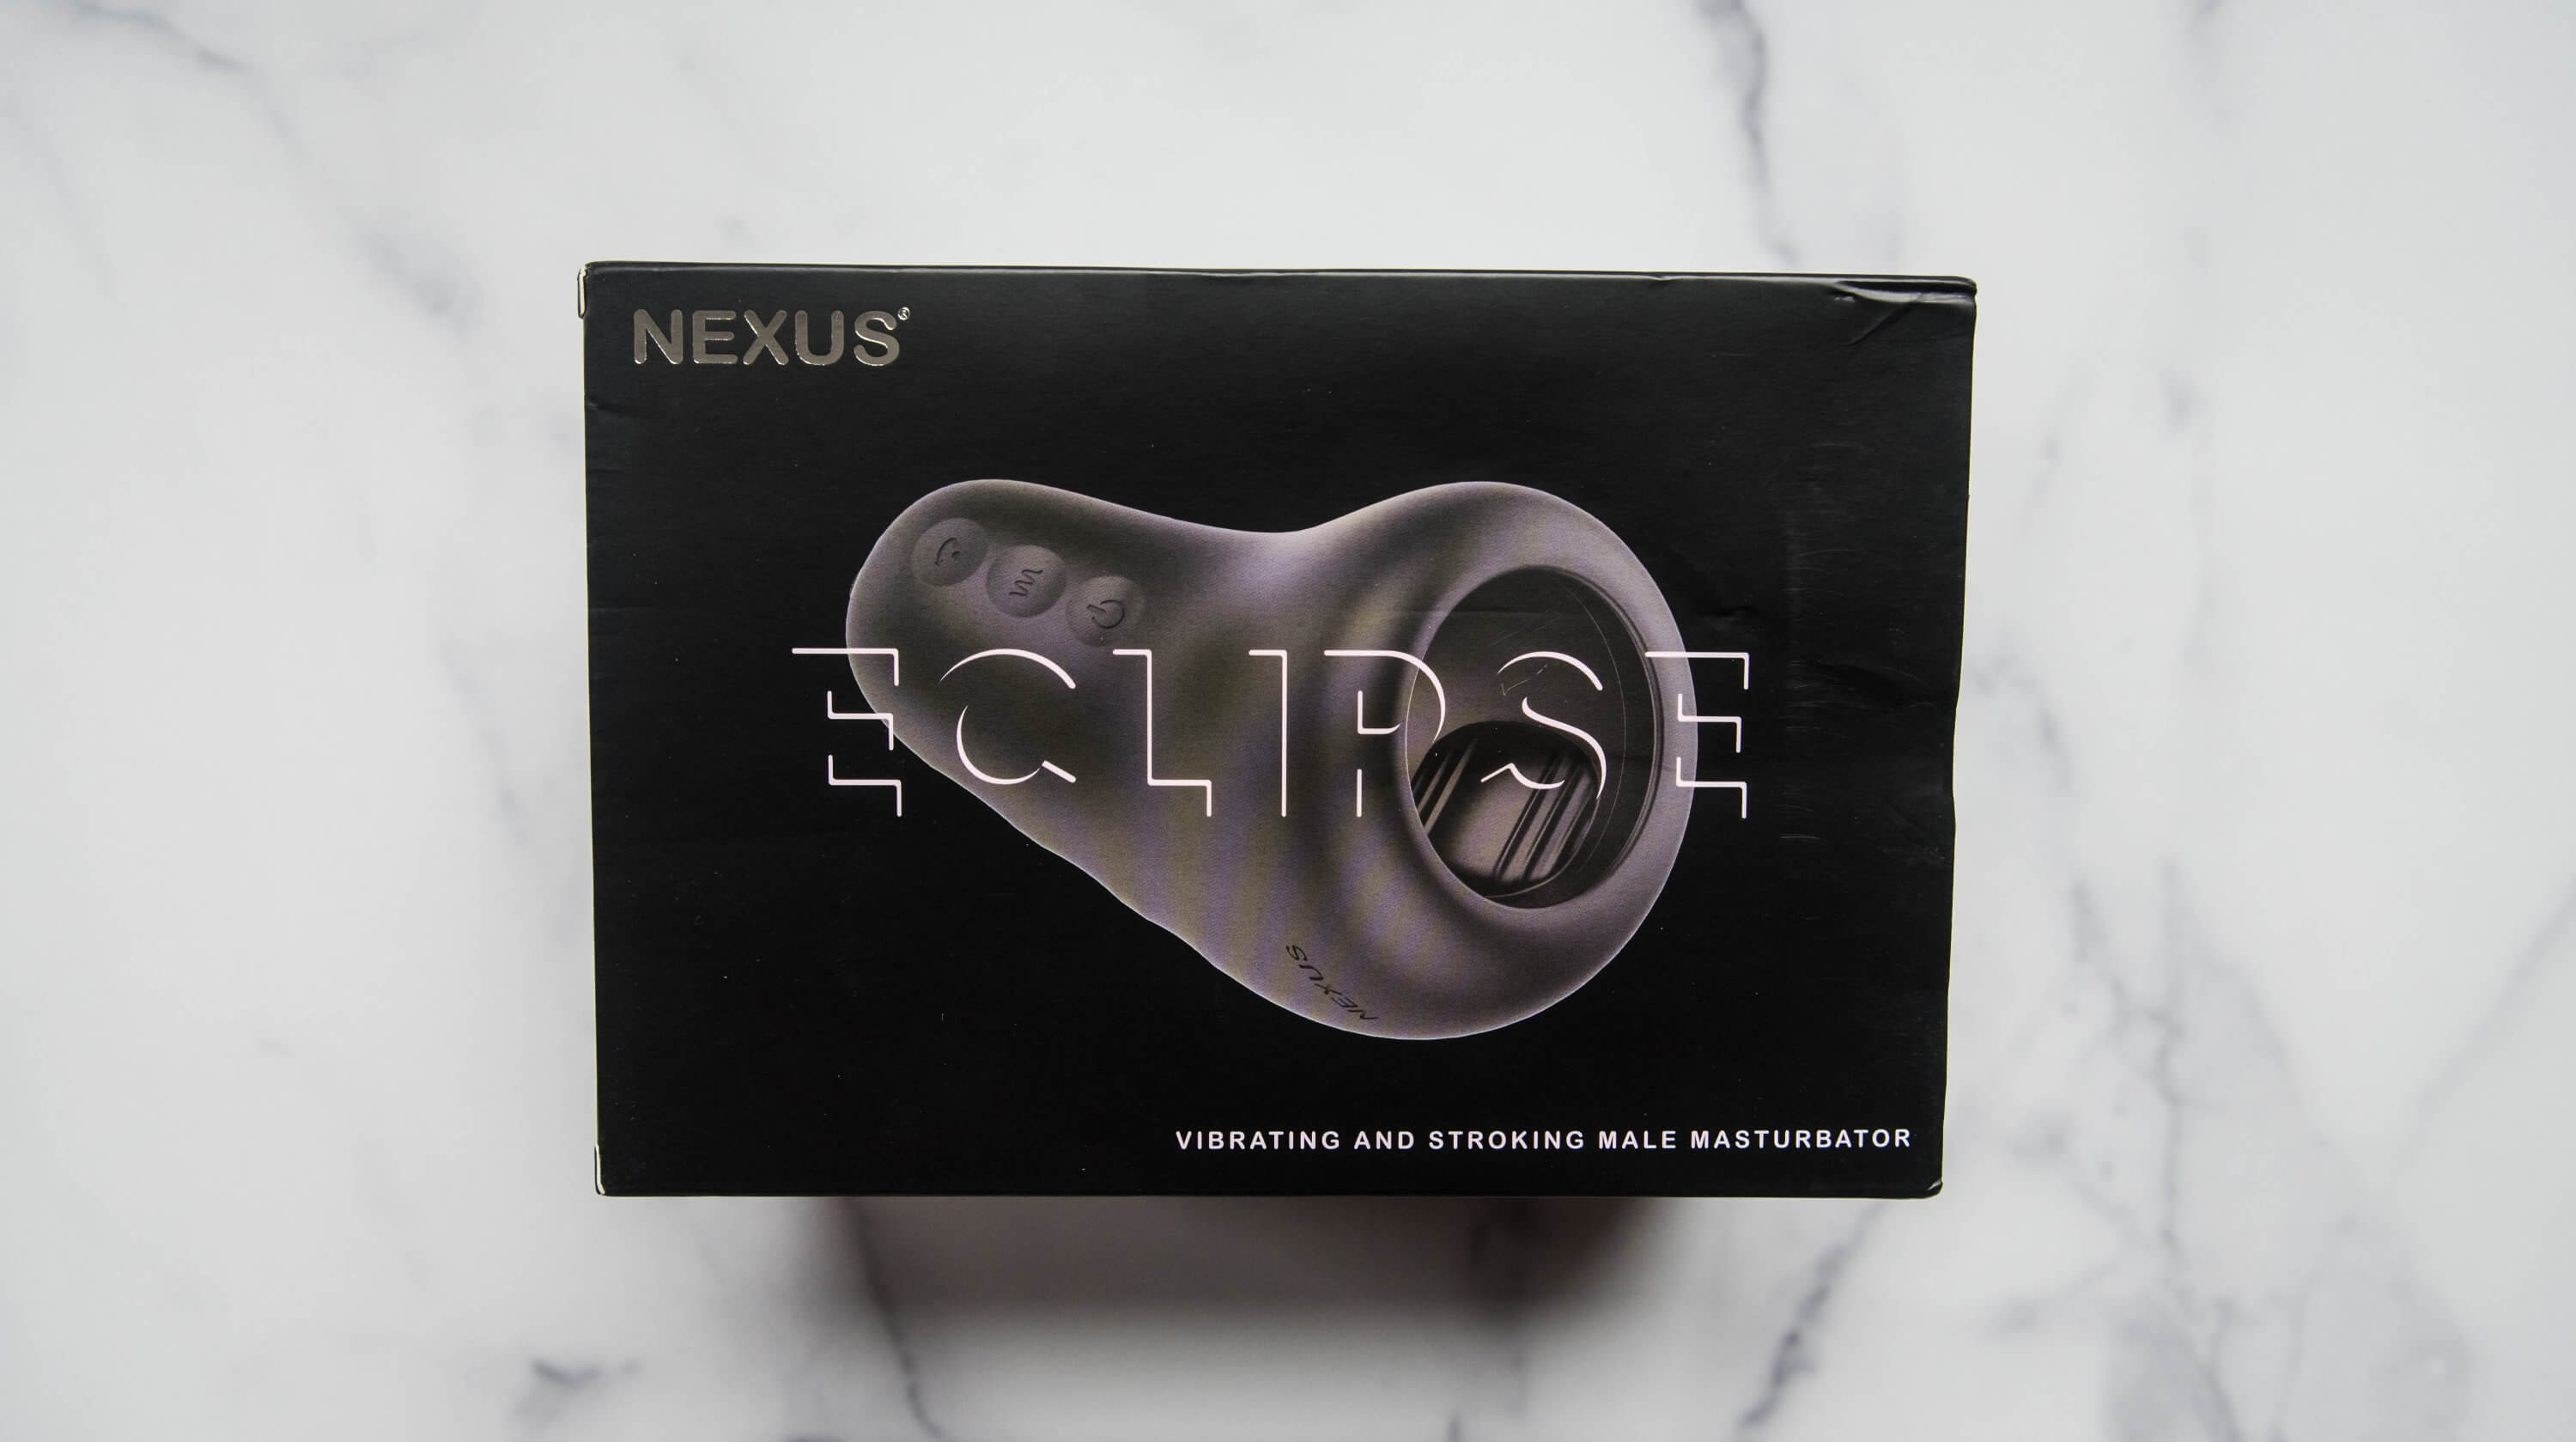 Nexus Eclipse review